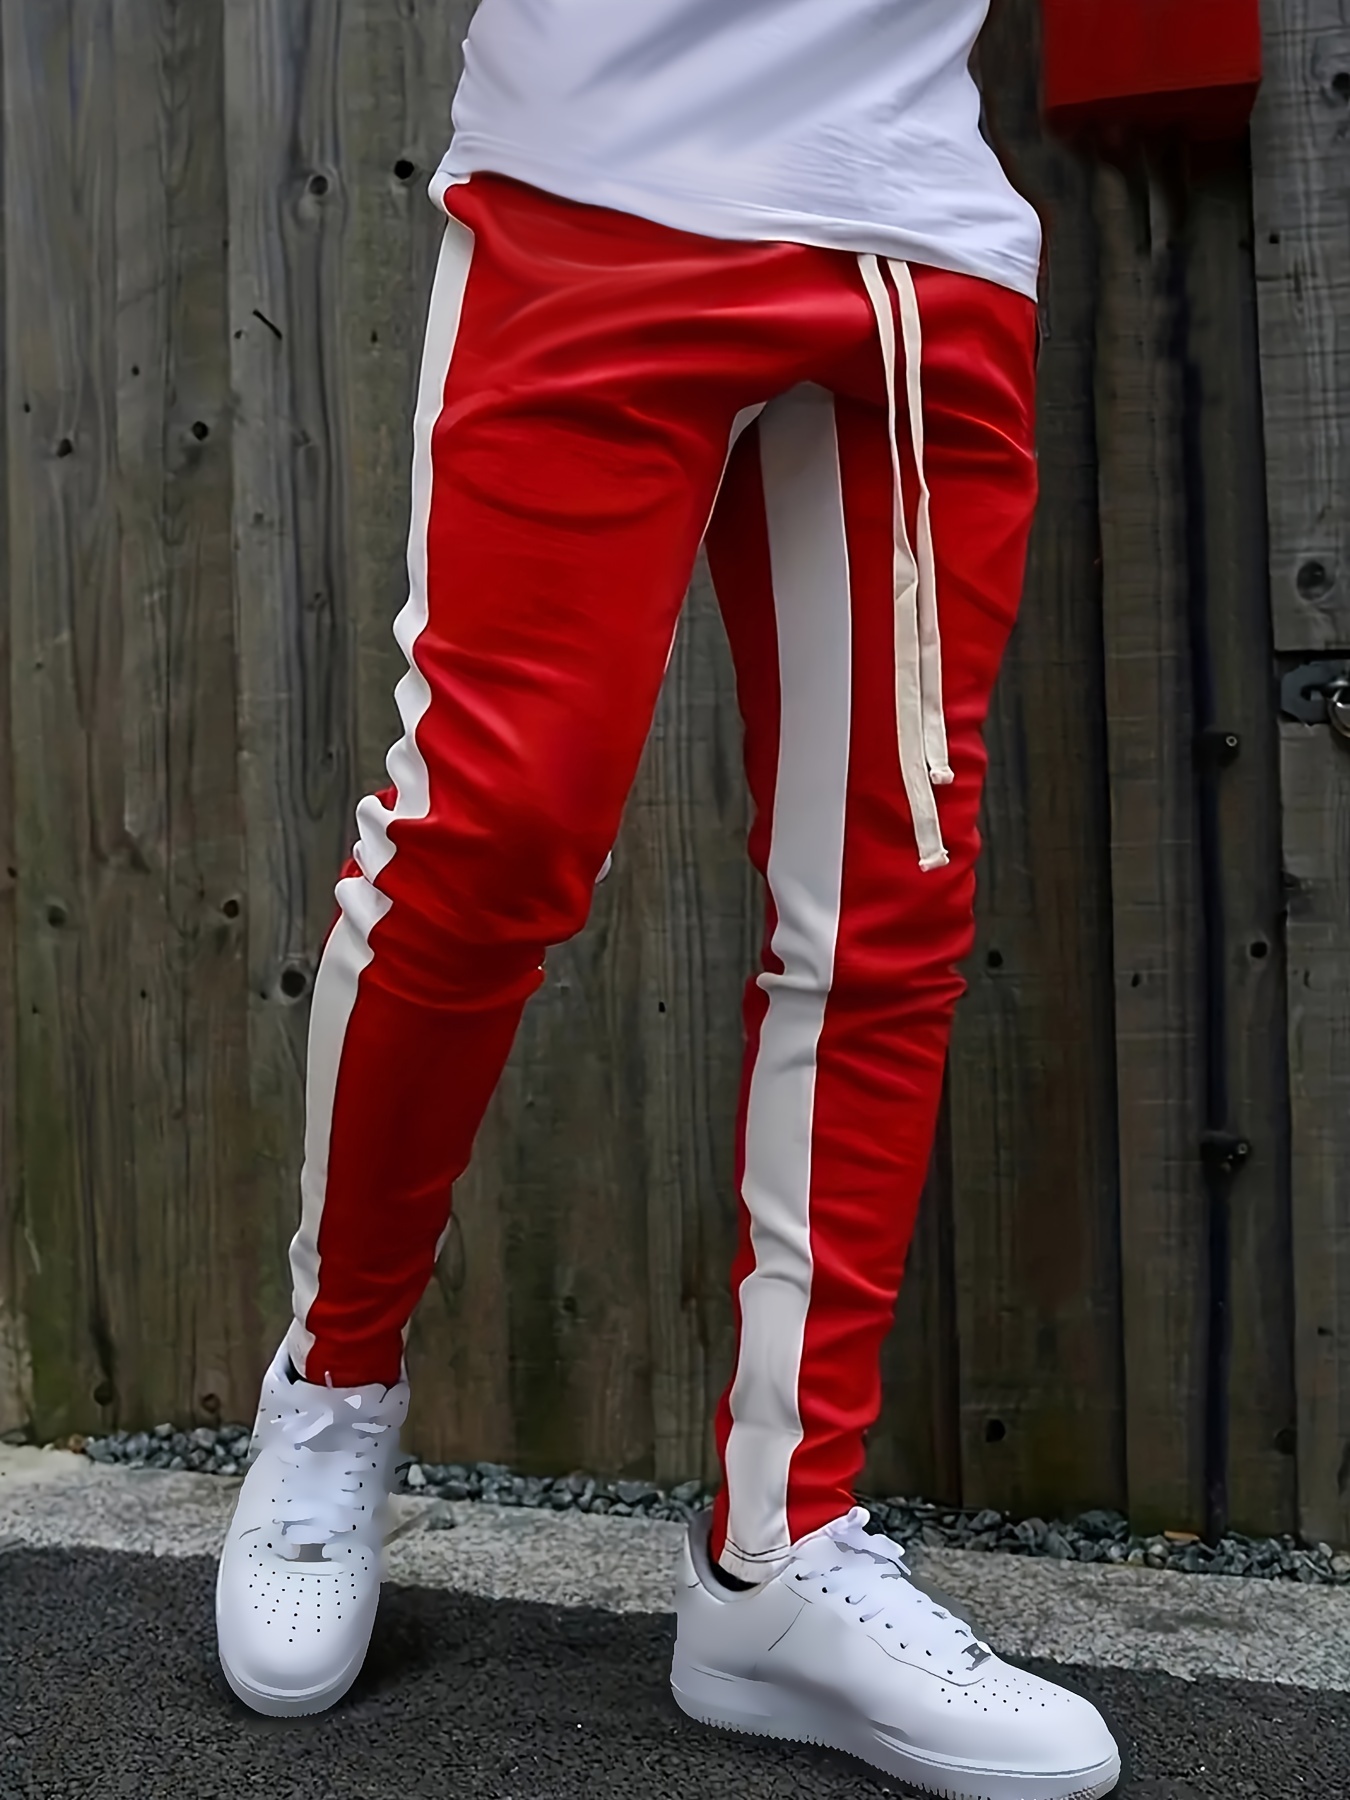 Men's Red Pants Inspiration